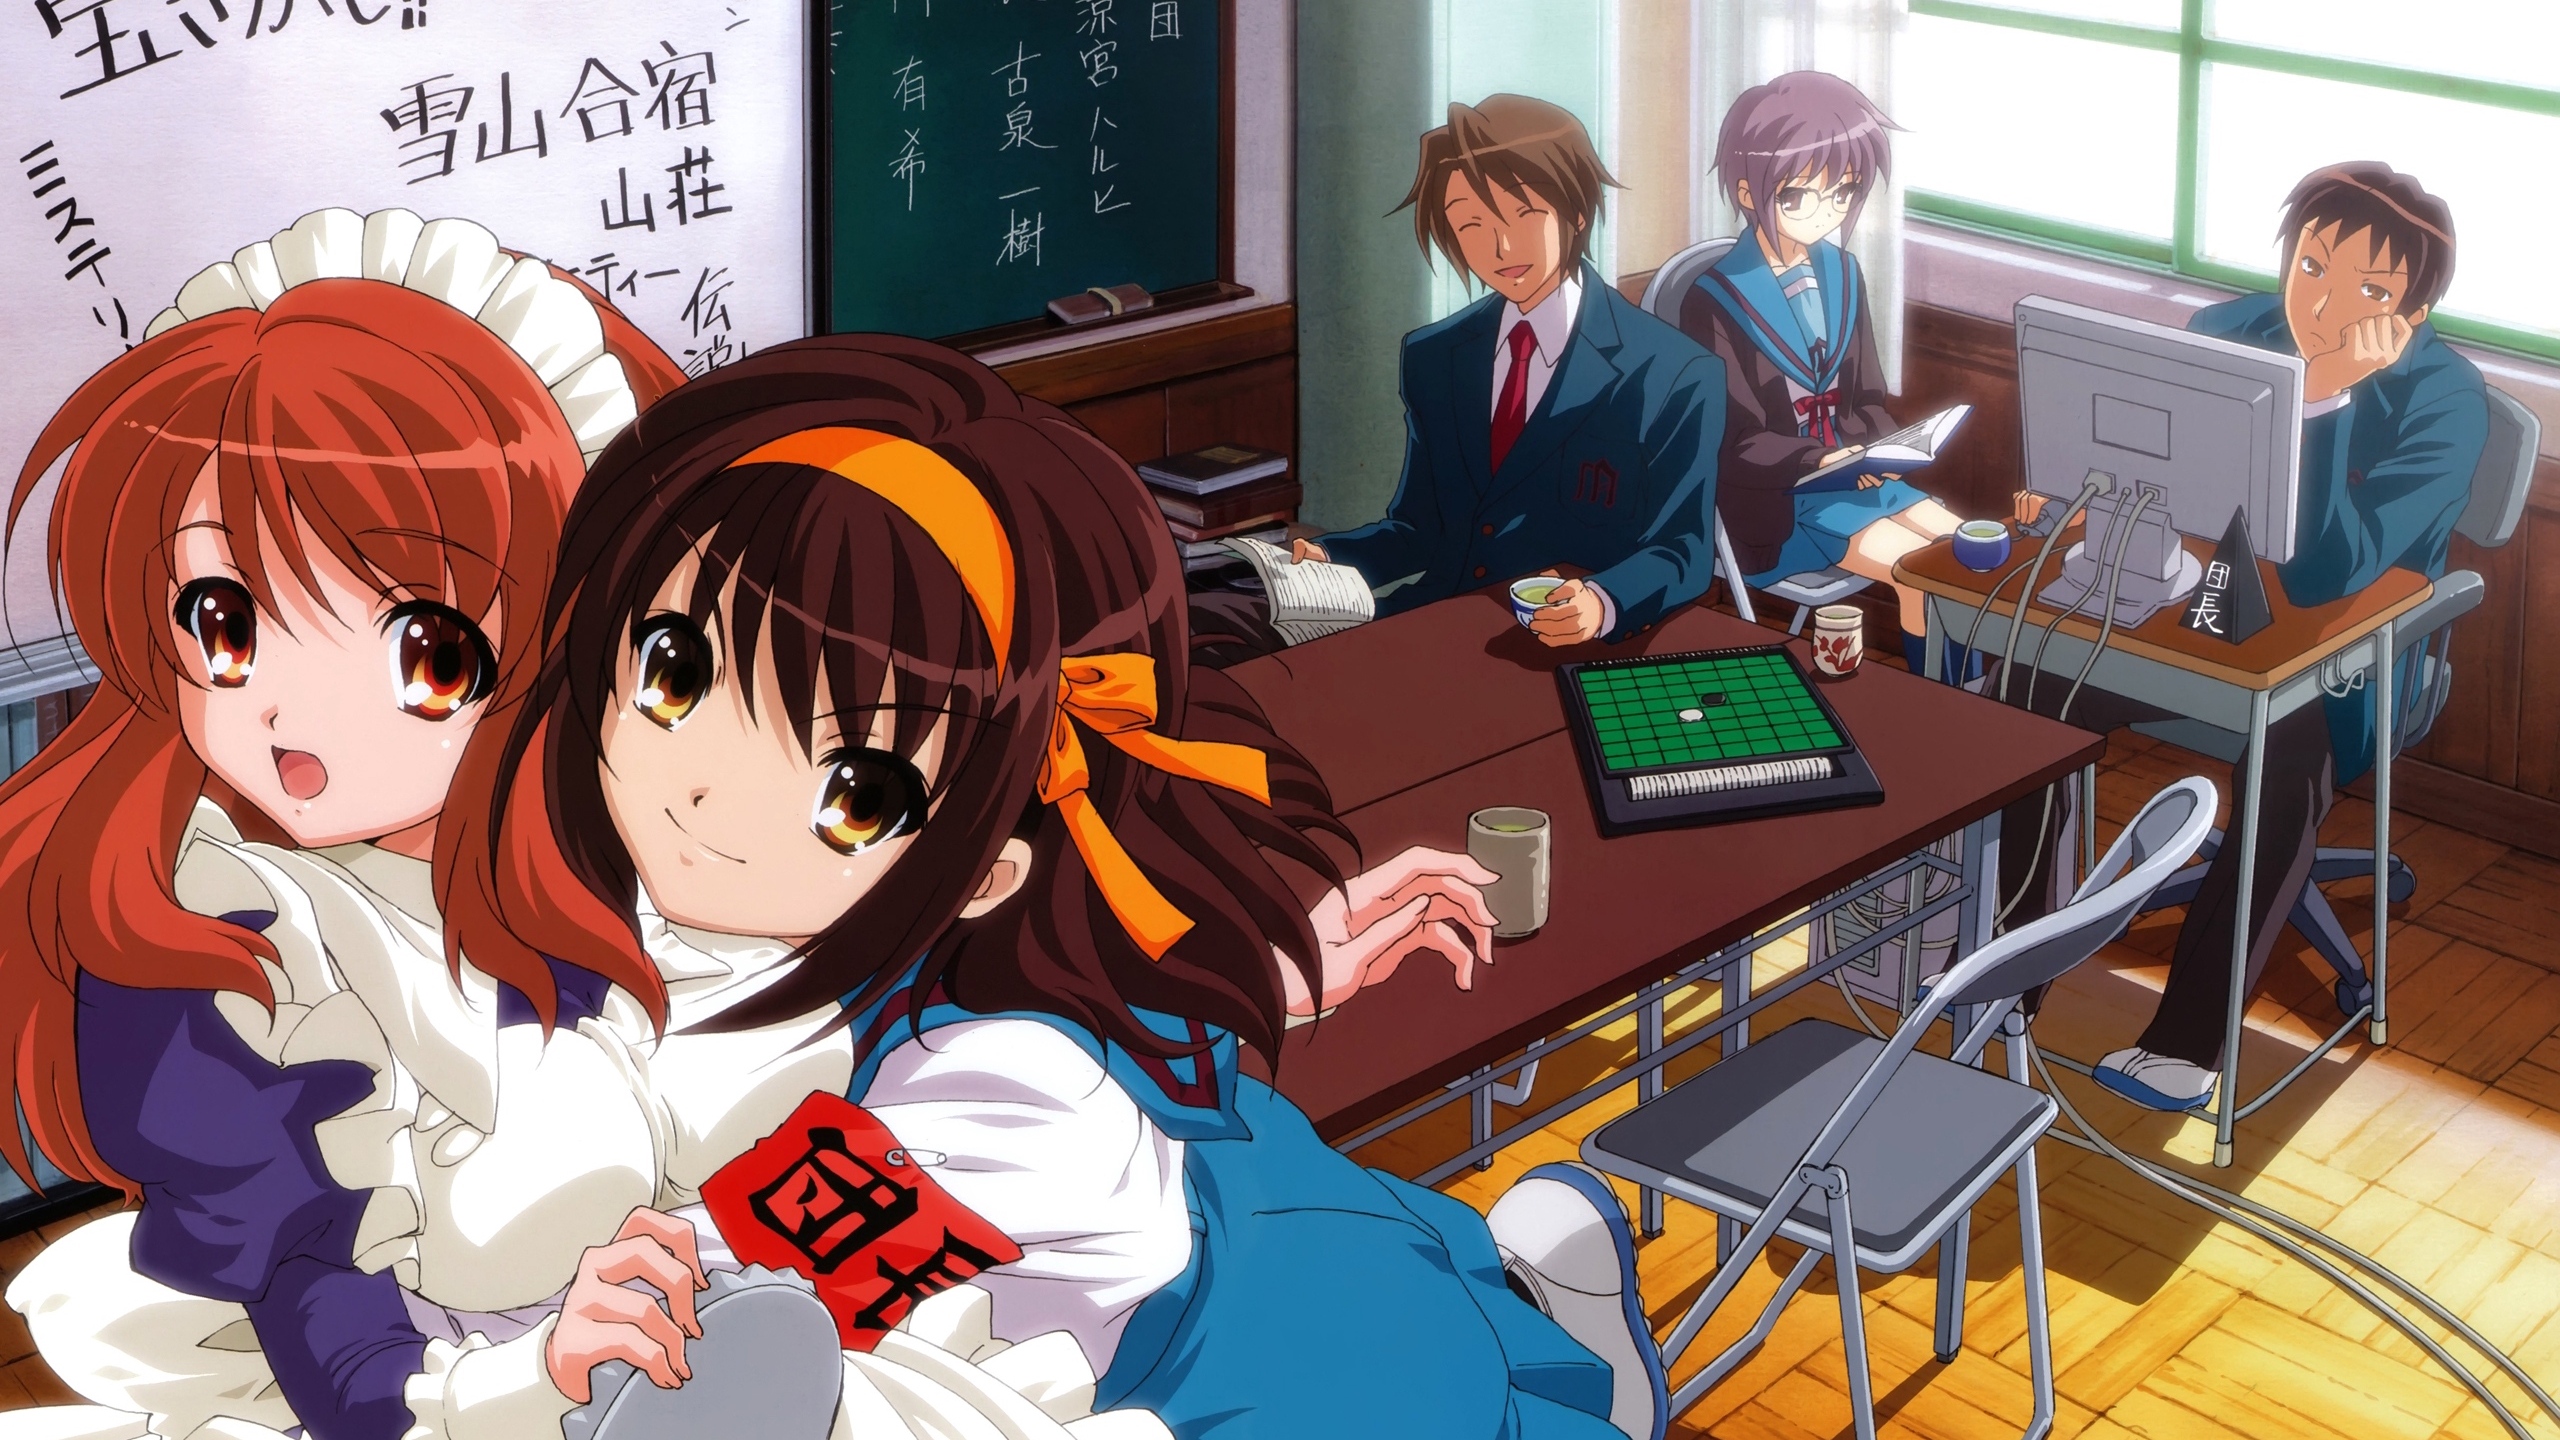 Wallpaper Anime, School, Class, Joy, Boredom, Enthusiasm - Japanese School  Club Rooms - 2560x1440 Wallpaper 